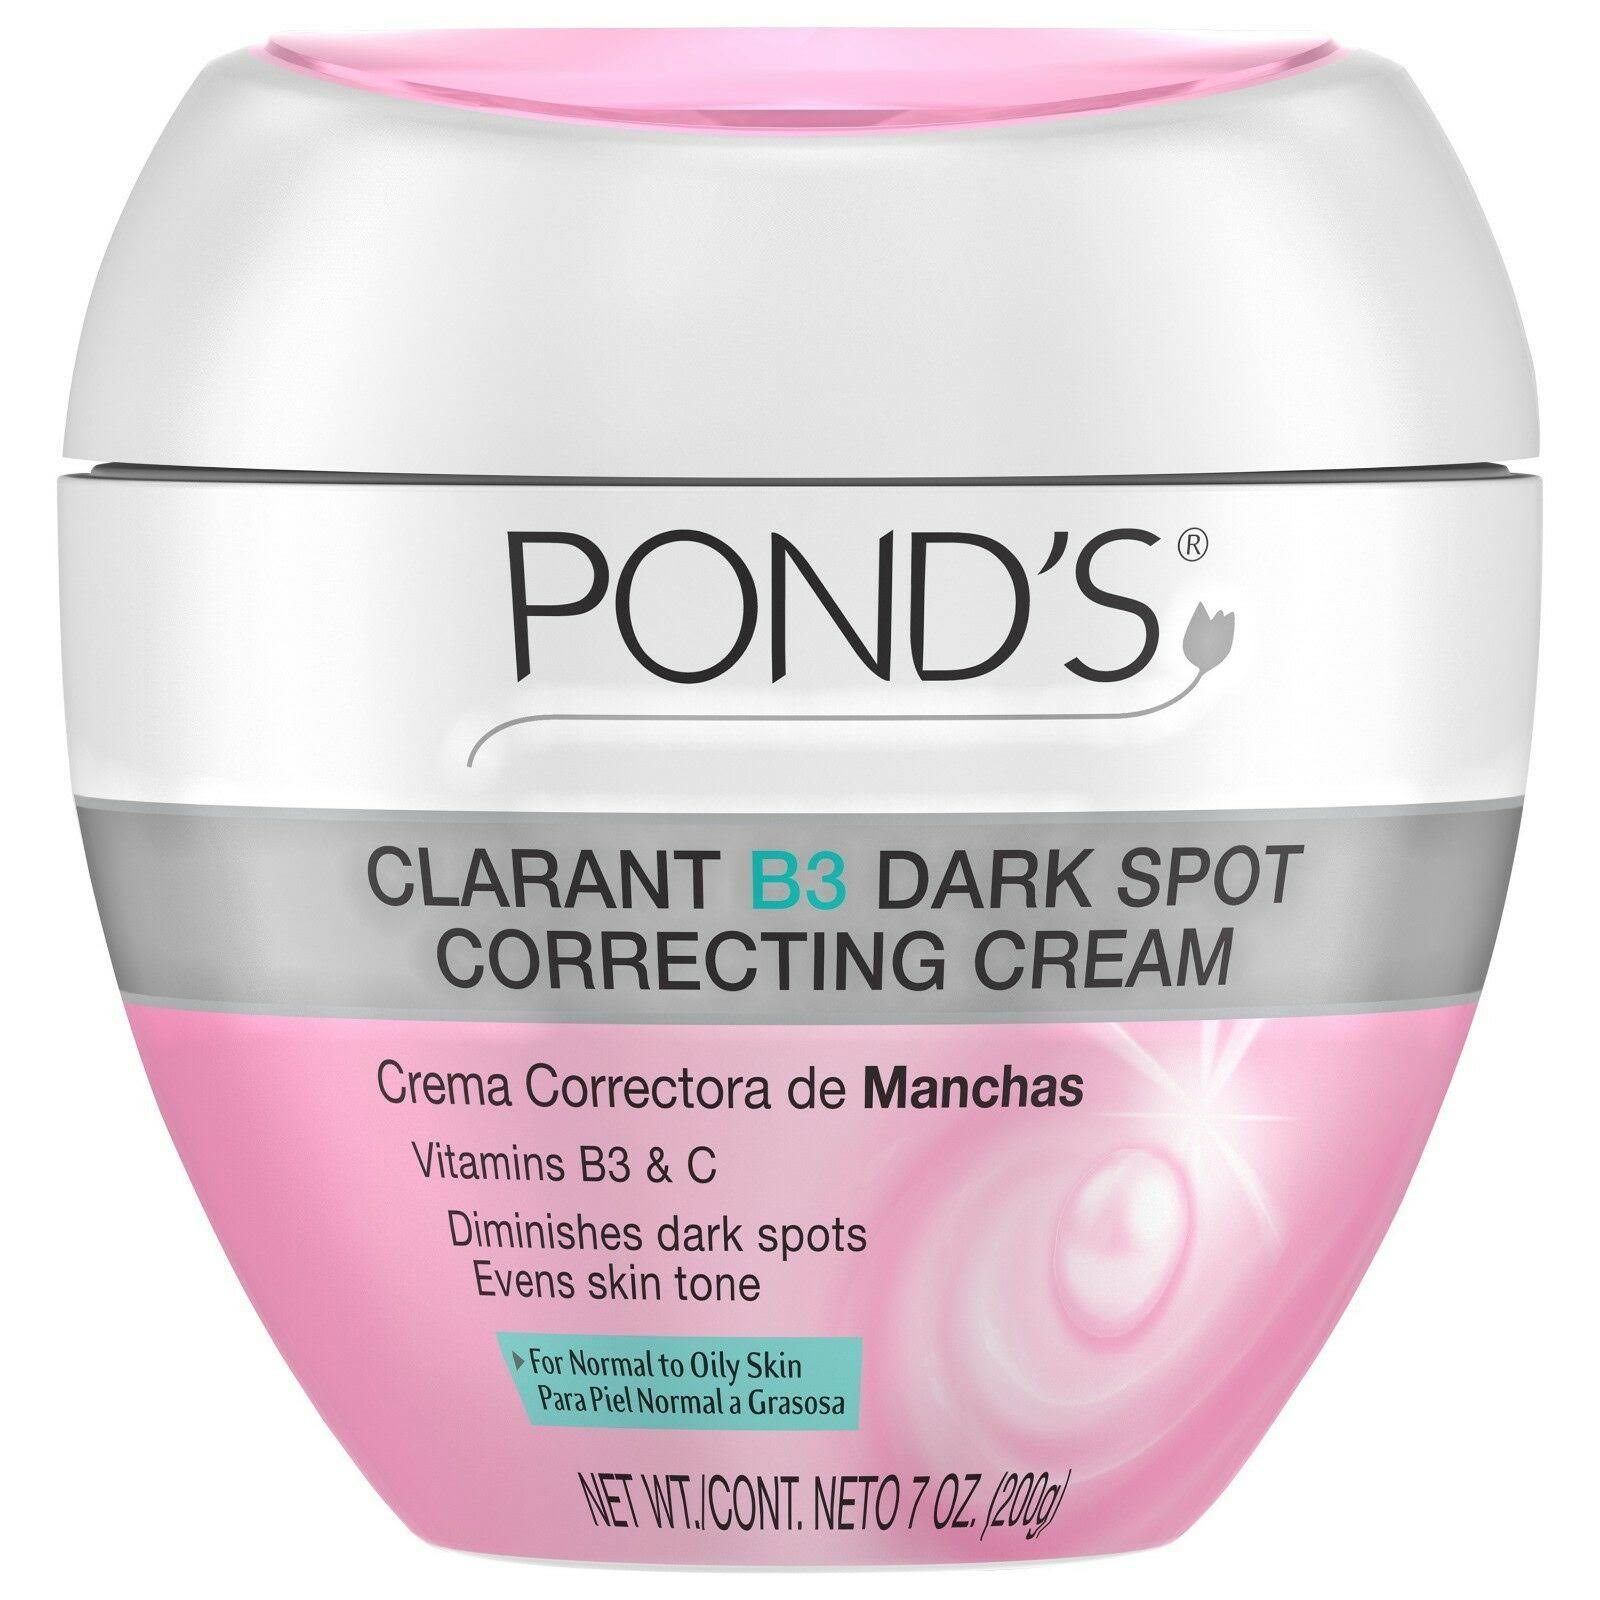 Pond's Clarant B3 Dark Spot Normal to Dry Skin Correcting Cream - 7oz